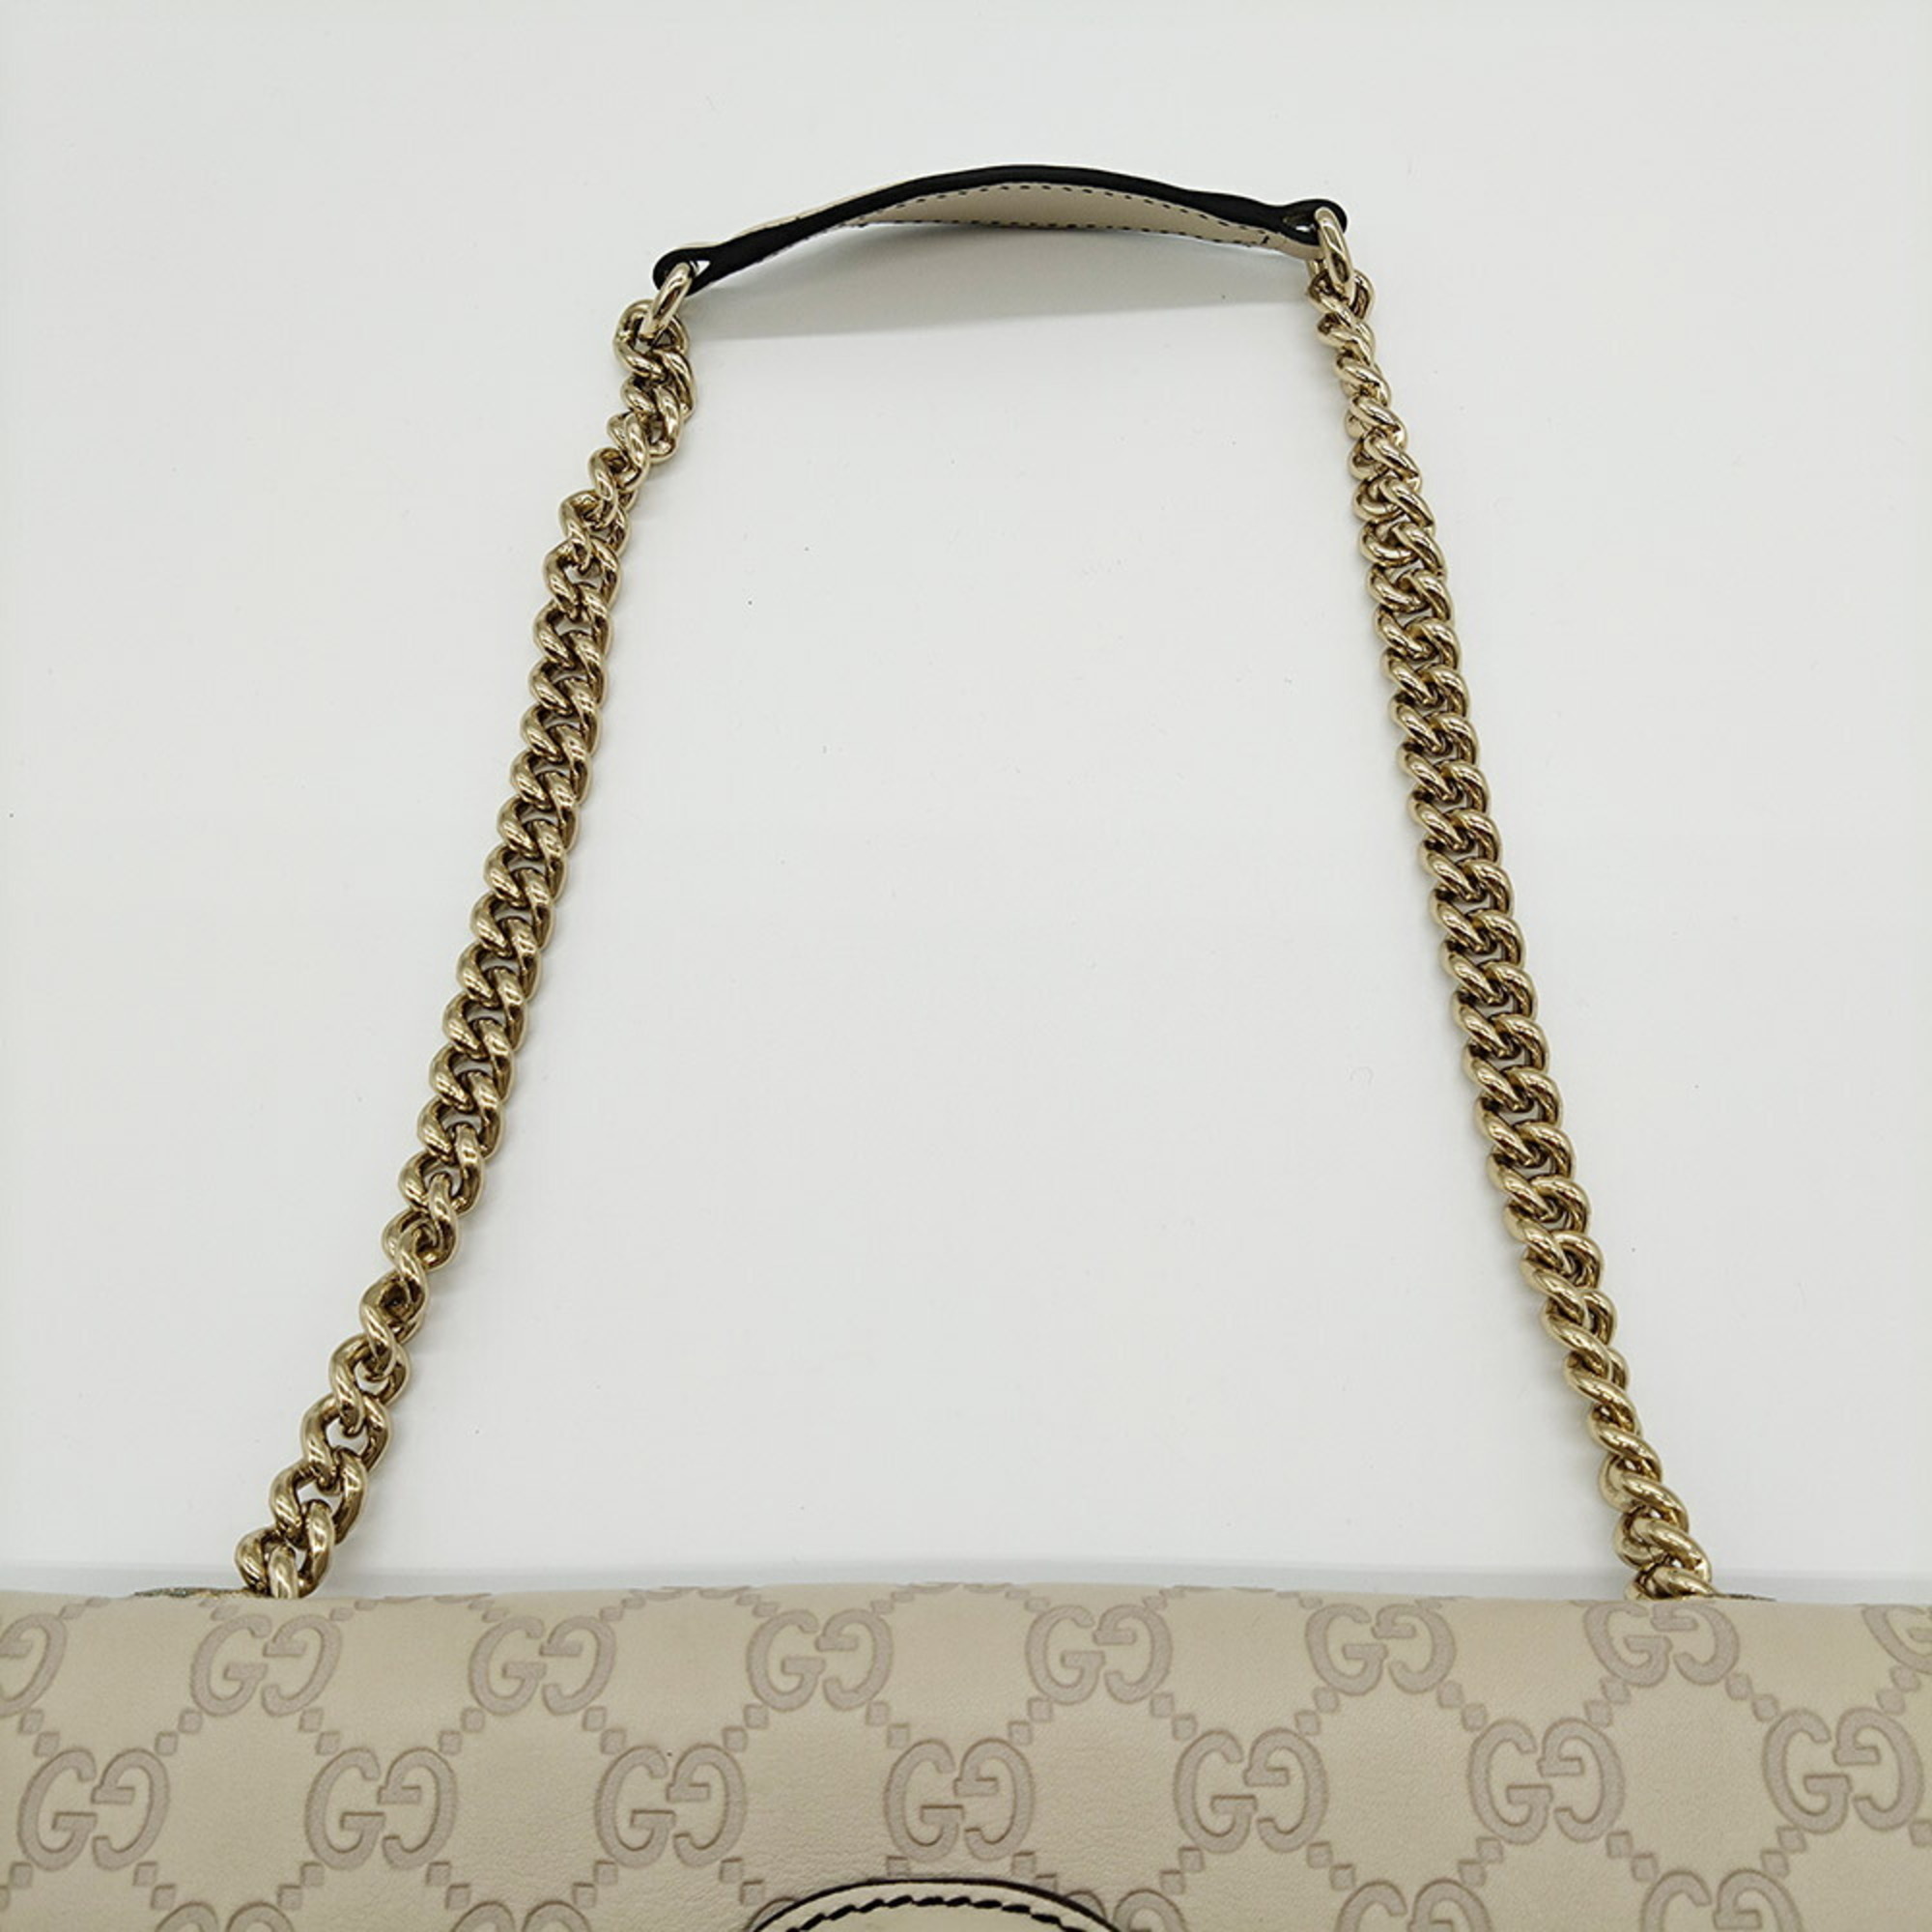 Gucci Guccissima Chain Shoulder Bag Horsebit Tassel Ivory White Leather 295402 GUCCI